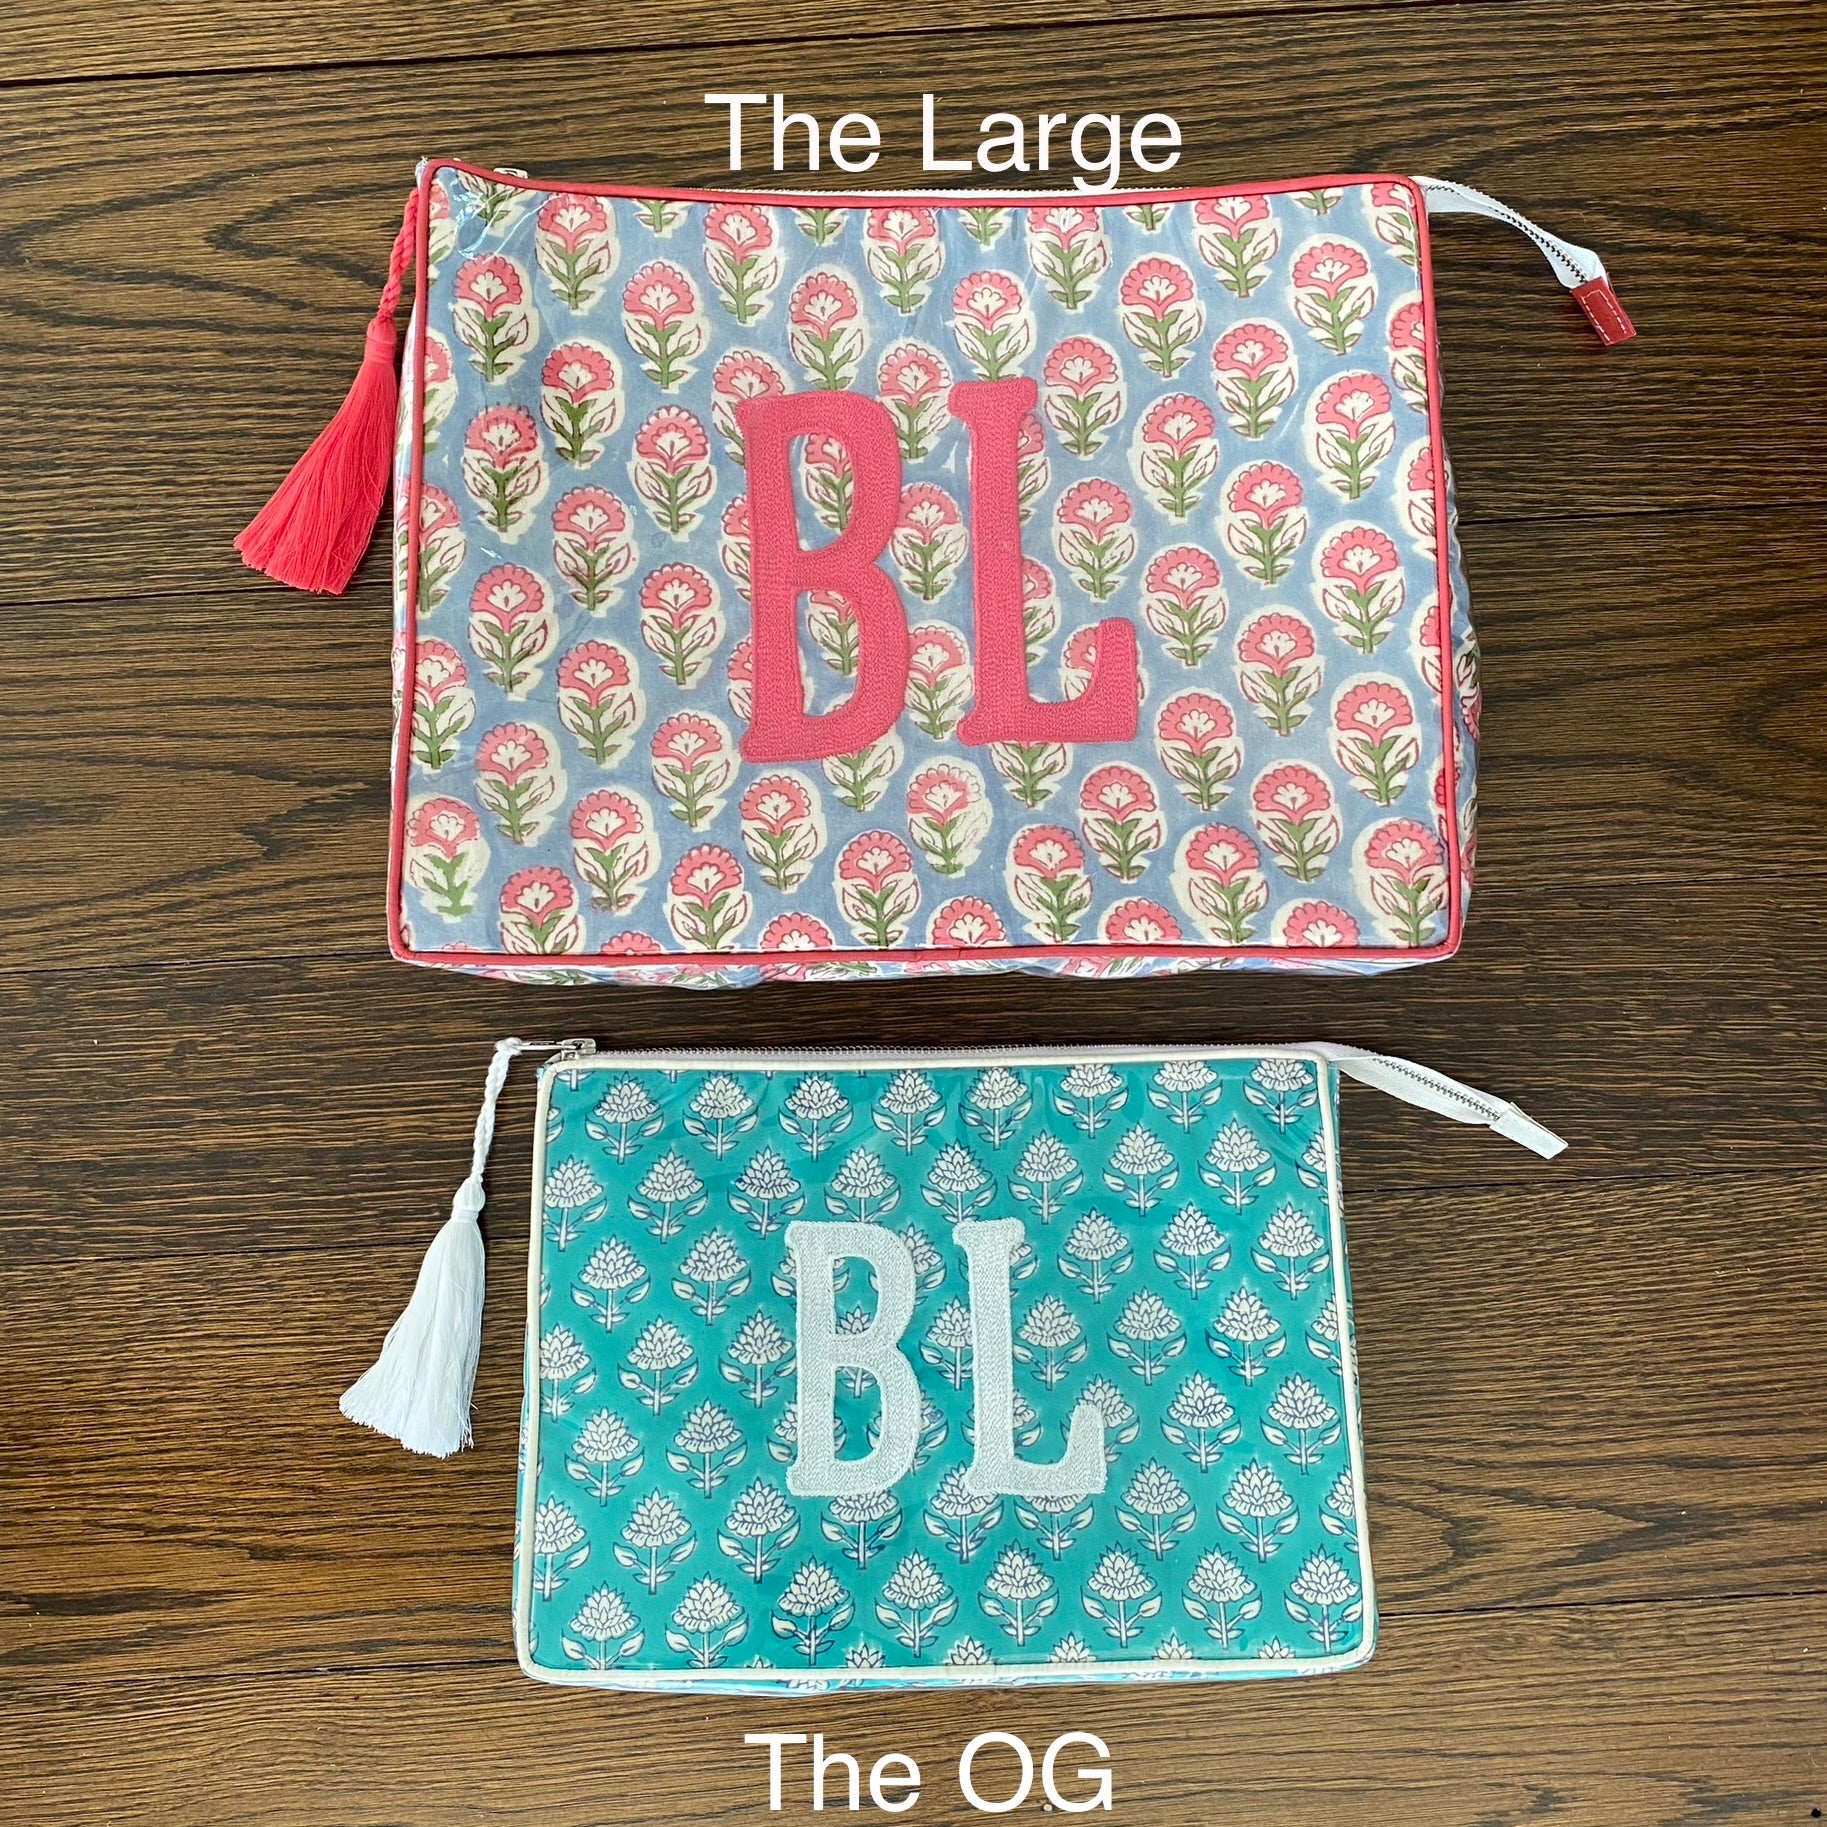 The Large - Custom Block Print Bag - Blue-Gray/Pink/Green